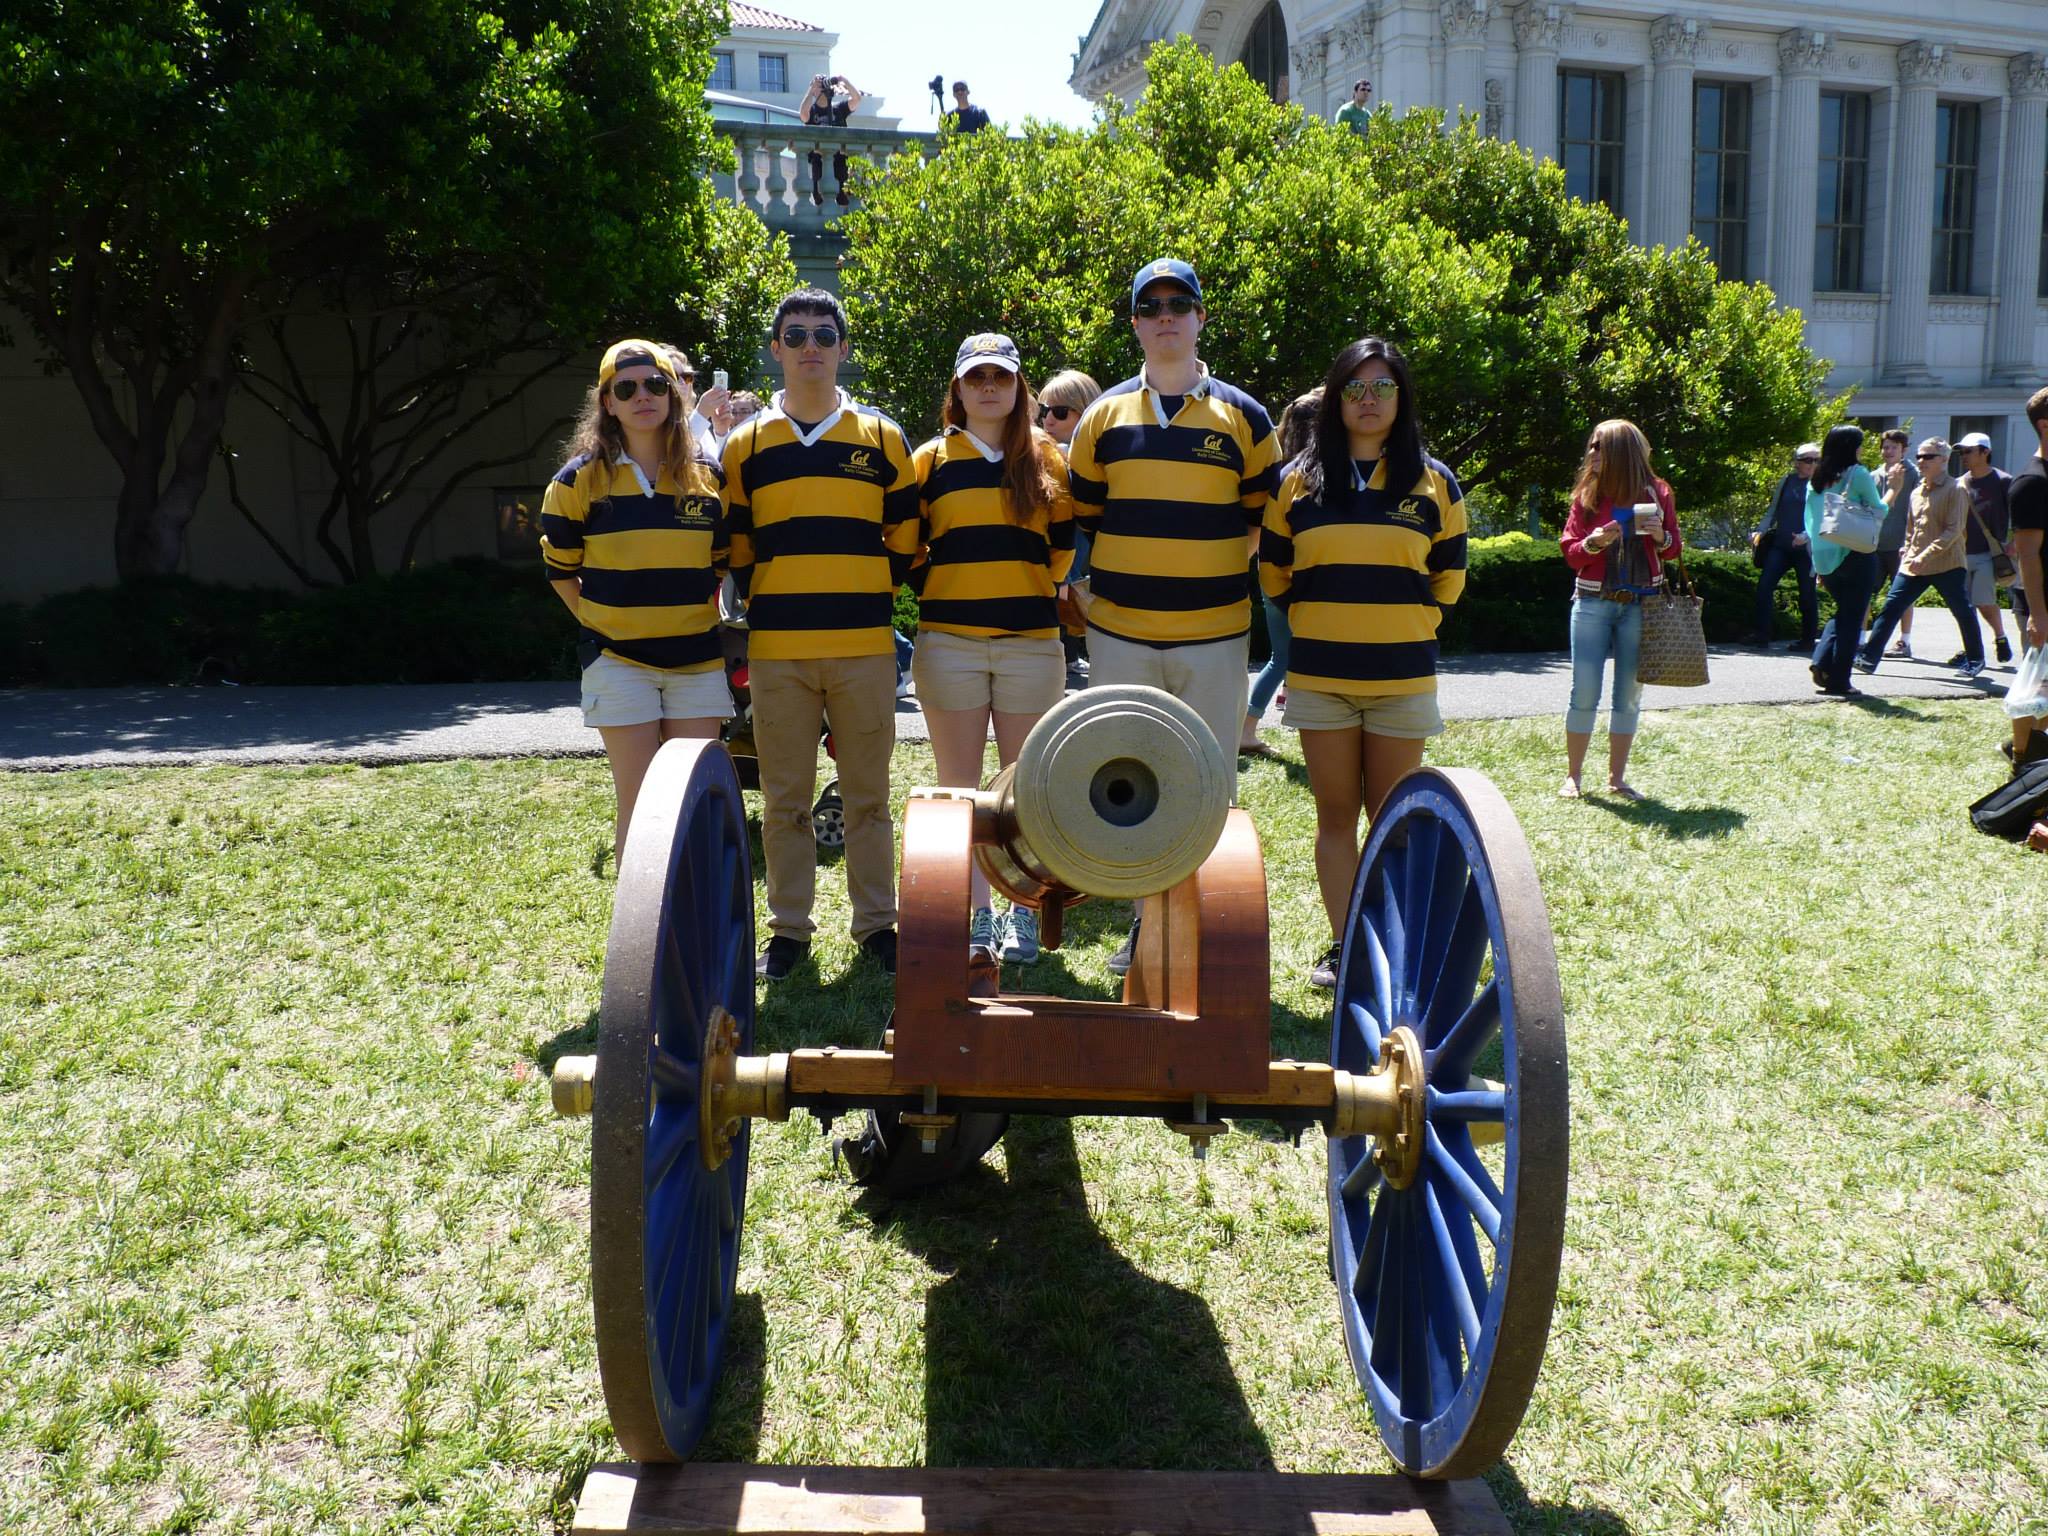 The California Victory Cannon